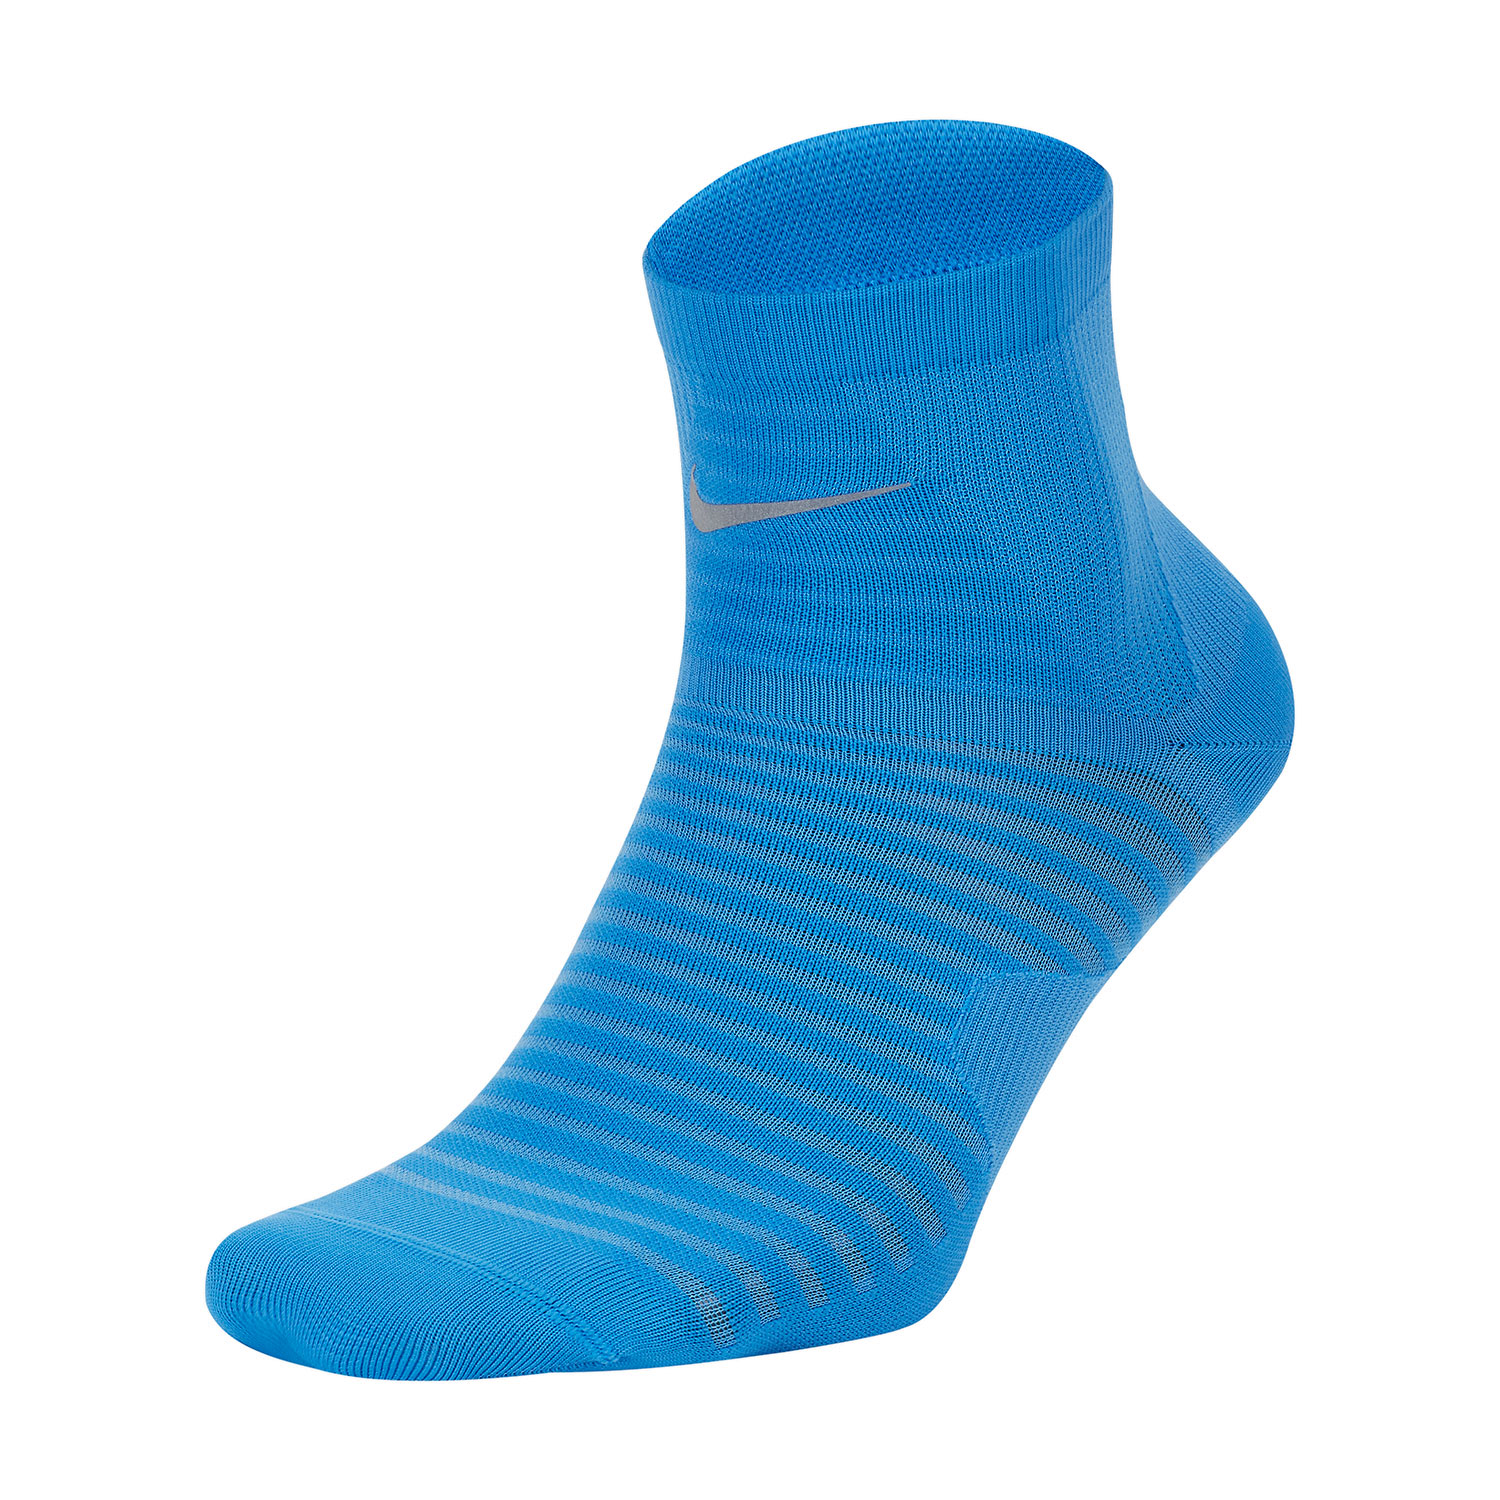 Nike Spark Lightweight Running Socks - Pacific Blue/Reflective